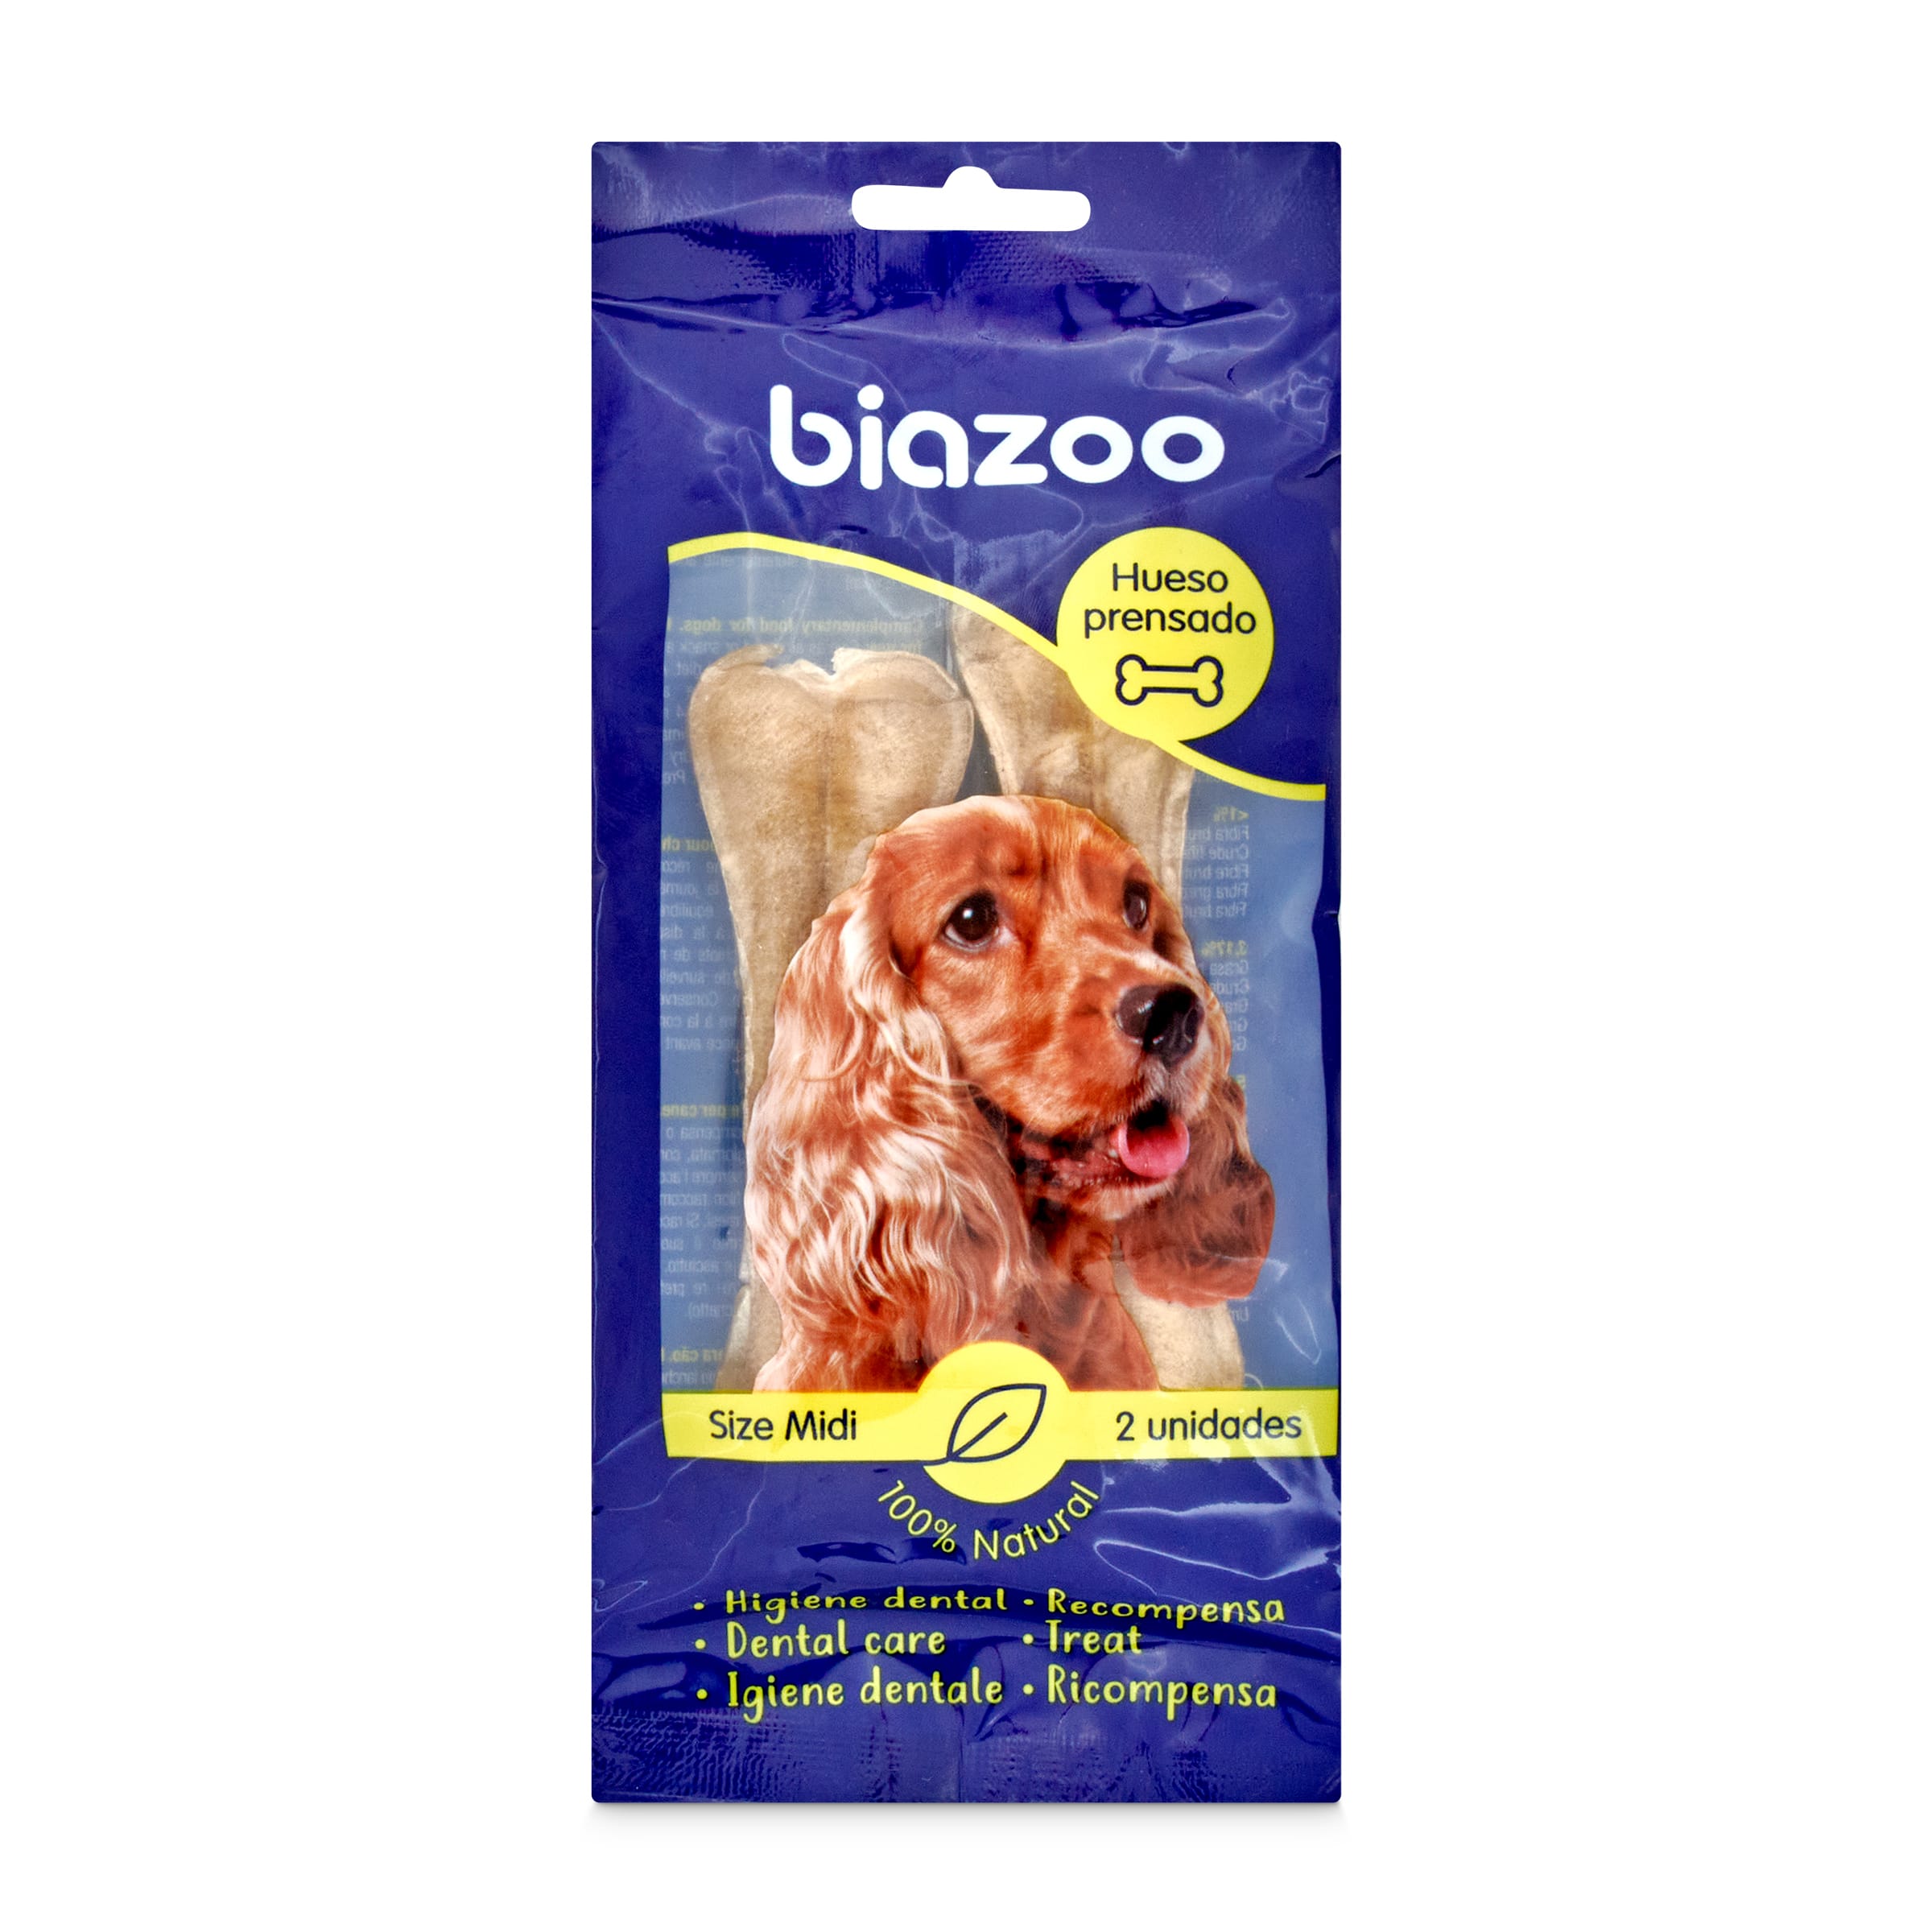 Hueso prensado para perros BIAZOO BOLSA 2 UD - Supermercados DIA